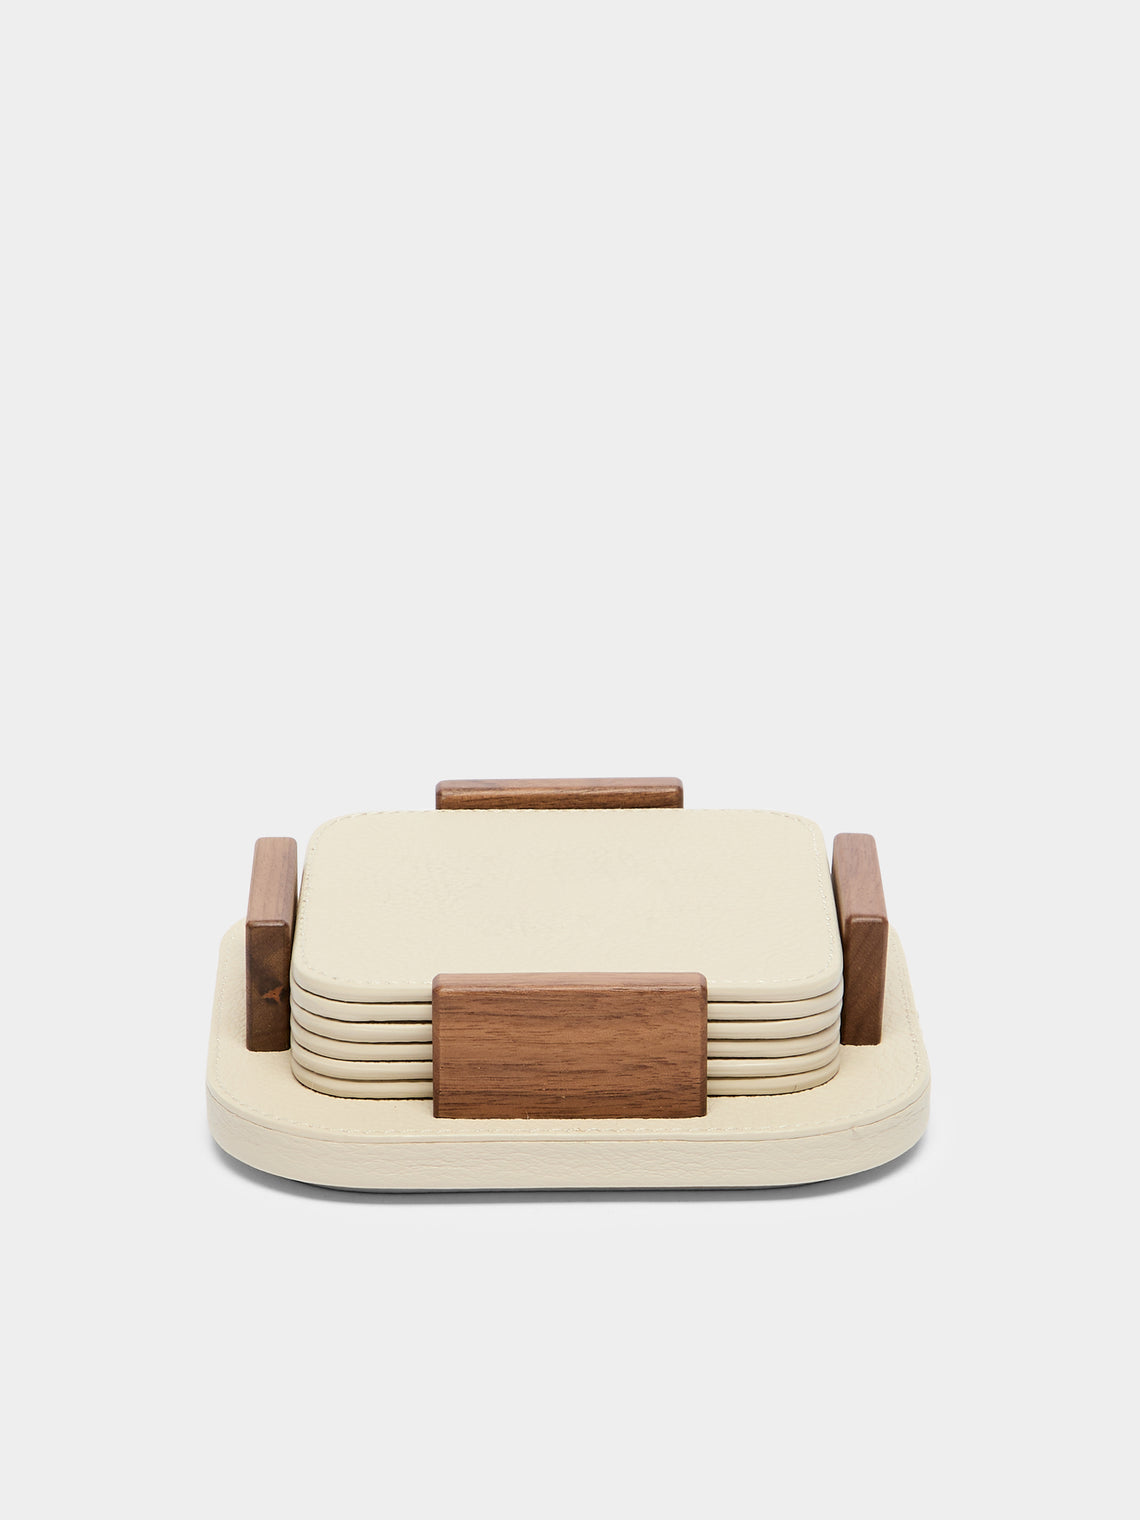 Giobagnara x Poltrona Frau - Leather and Walnut Coasters with Holder (Set of 6) -  - ABASK - 